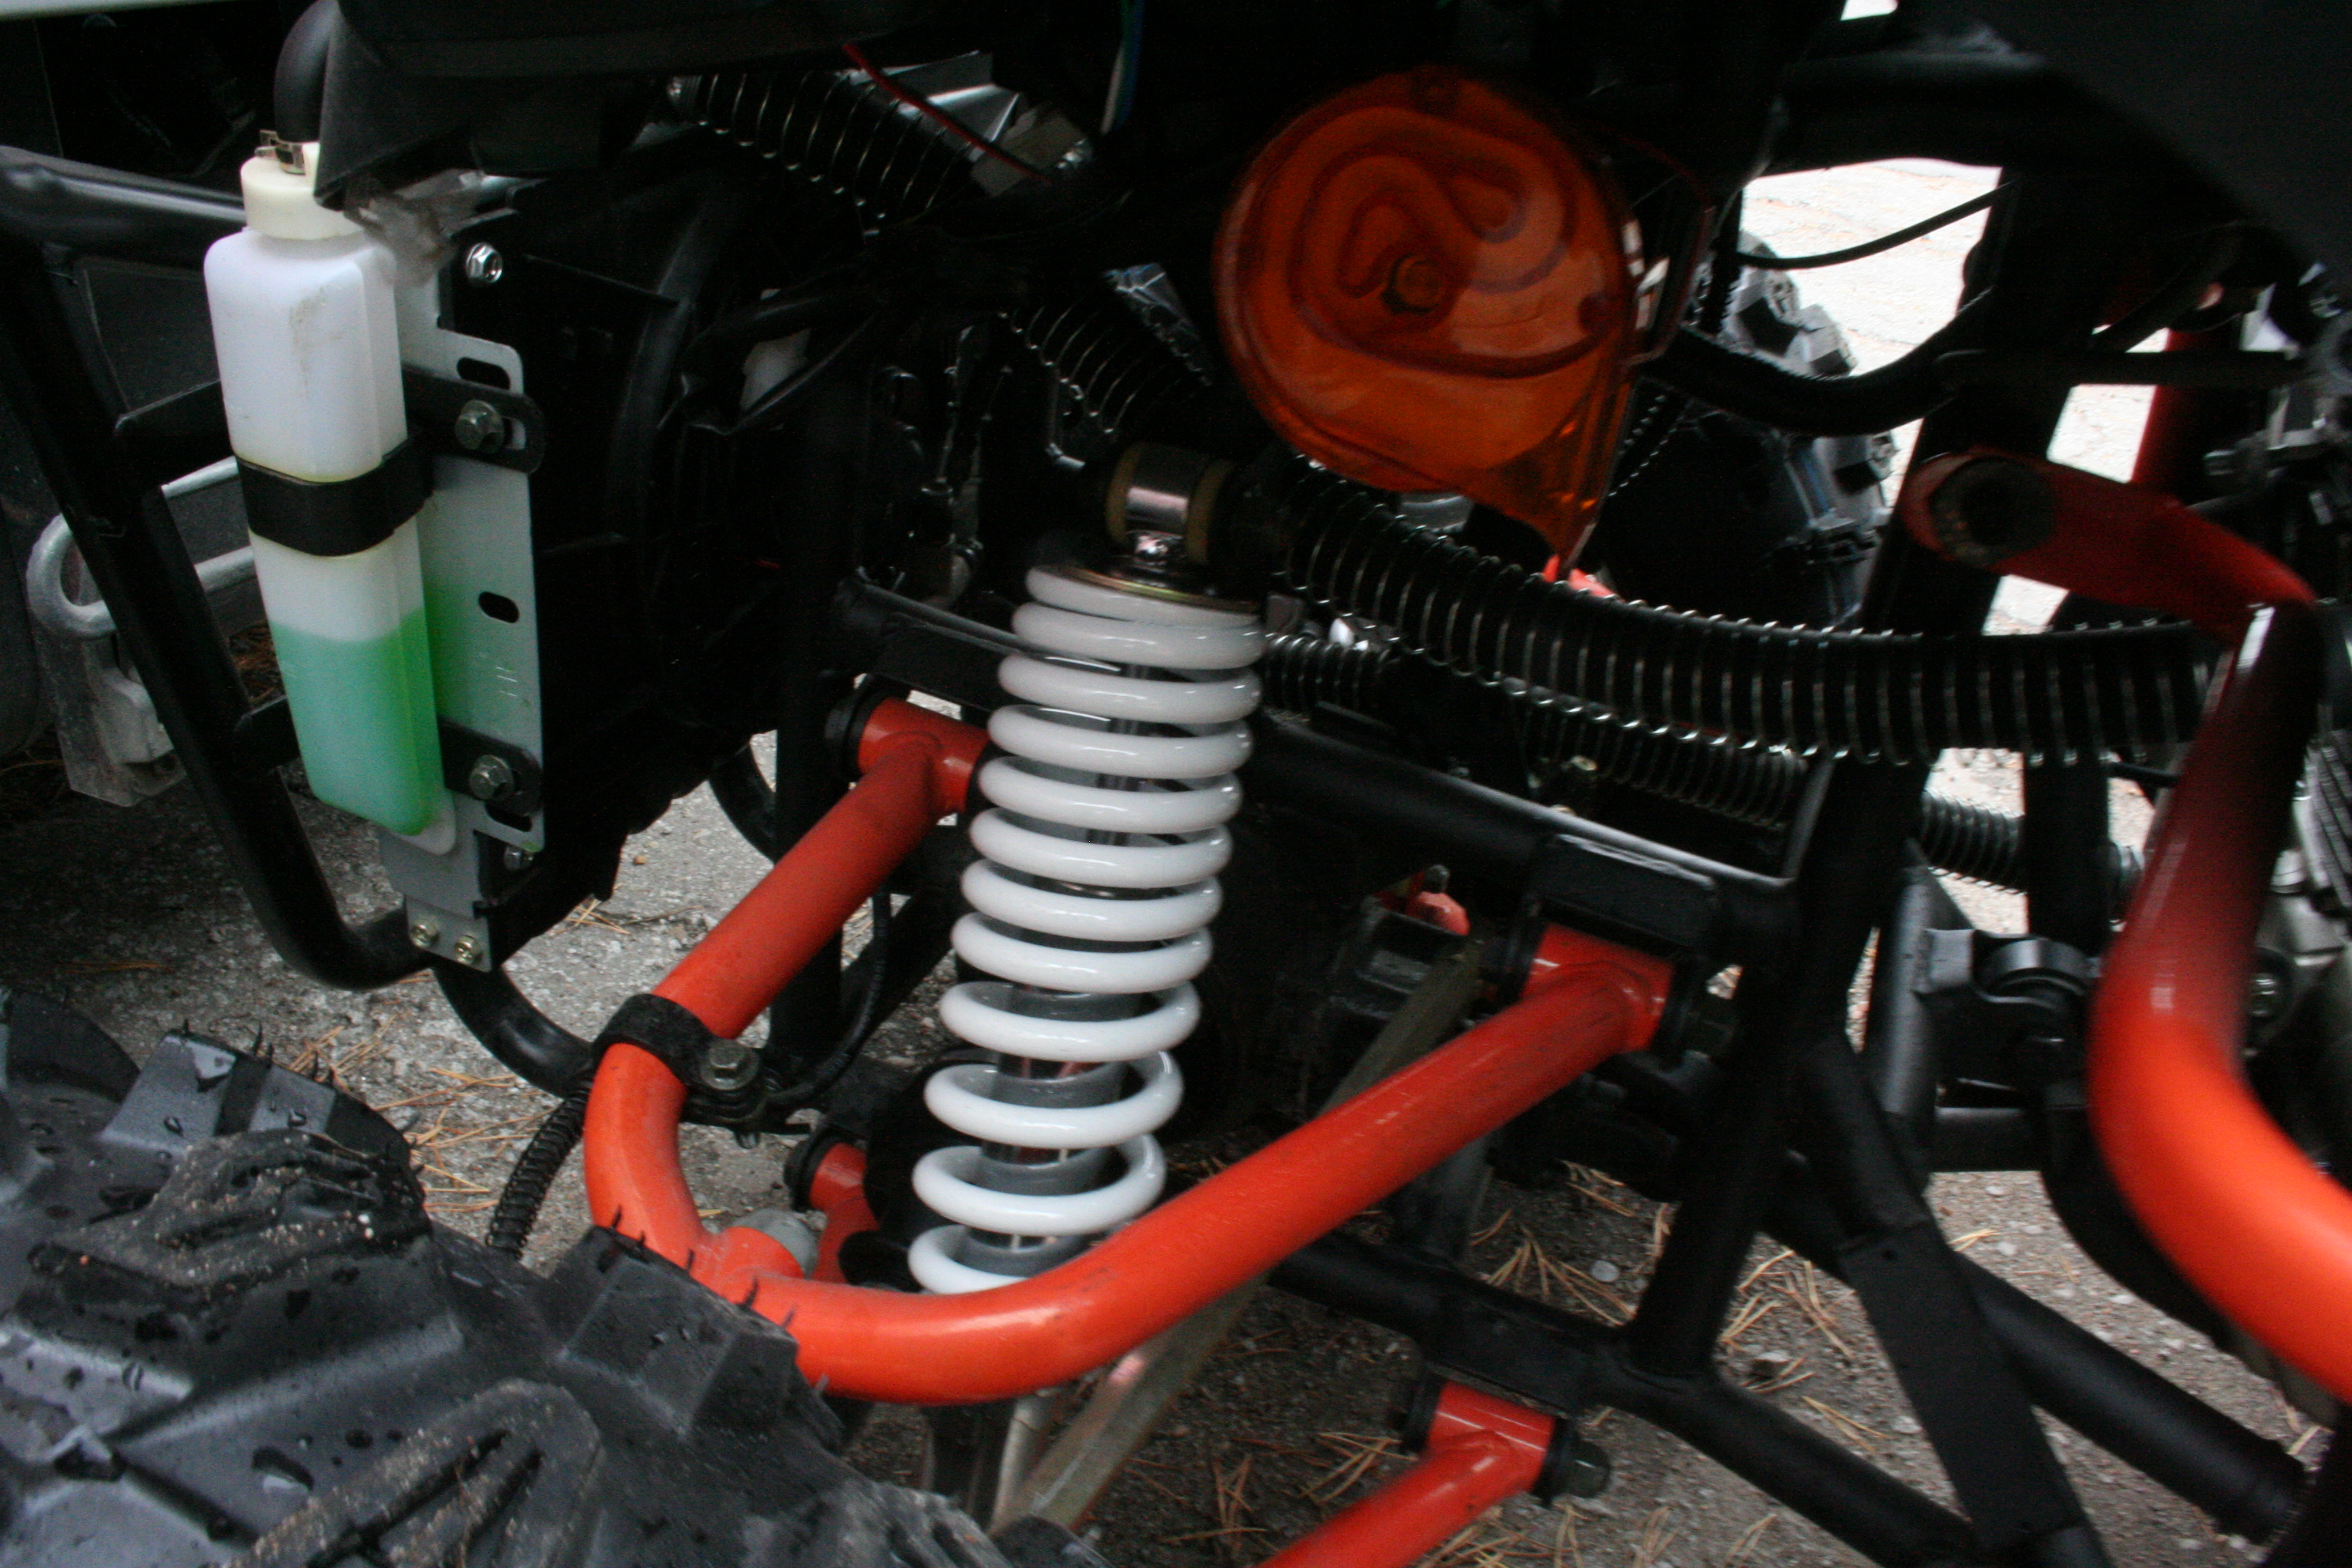 Грузовой квадроцикл Zongshen Tundra 4WD 300 см3